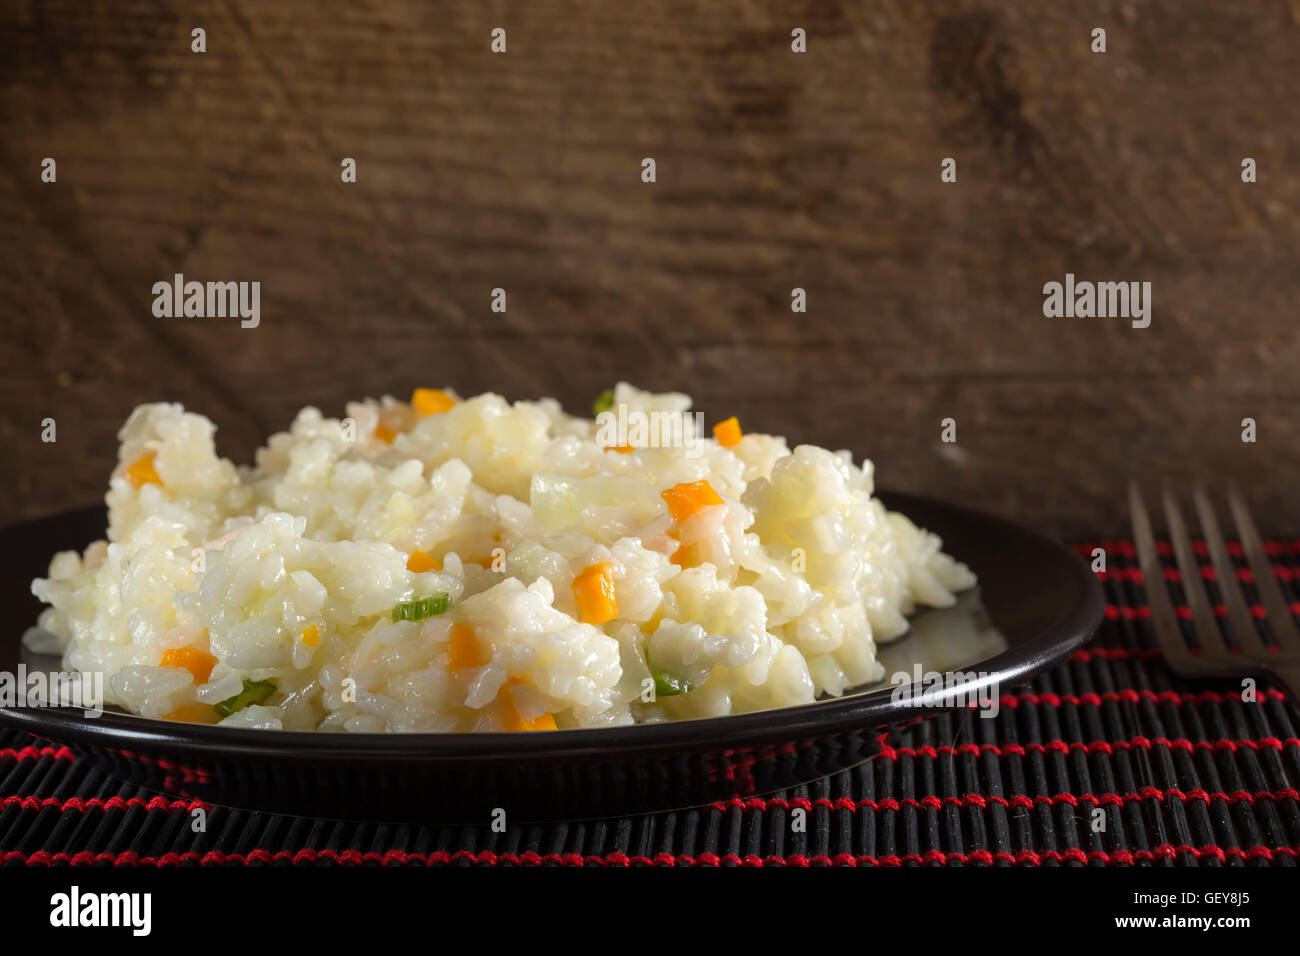 Ein Teller mit Reis mit Gemüse. Selektiven Fokus. Stockfoto